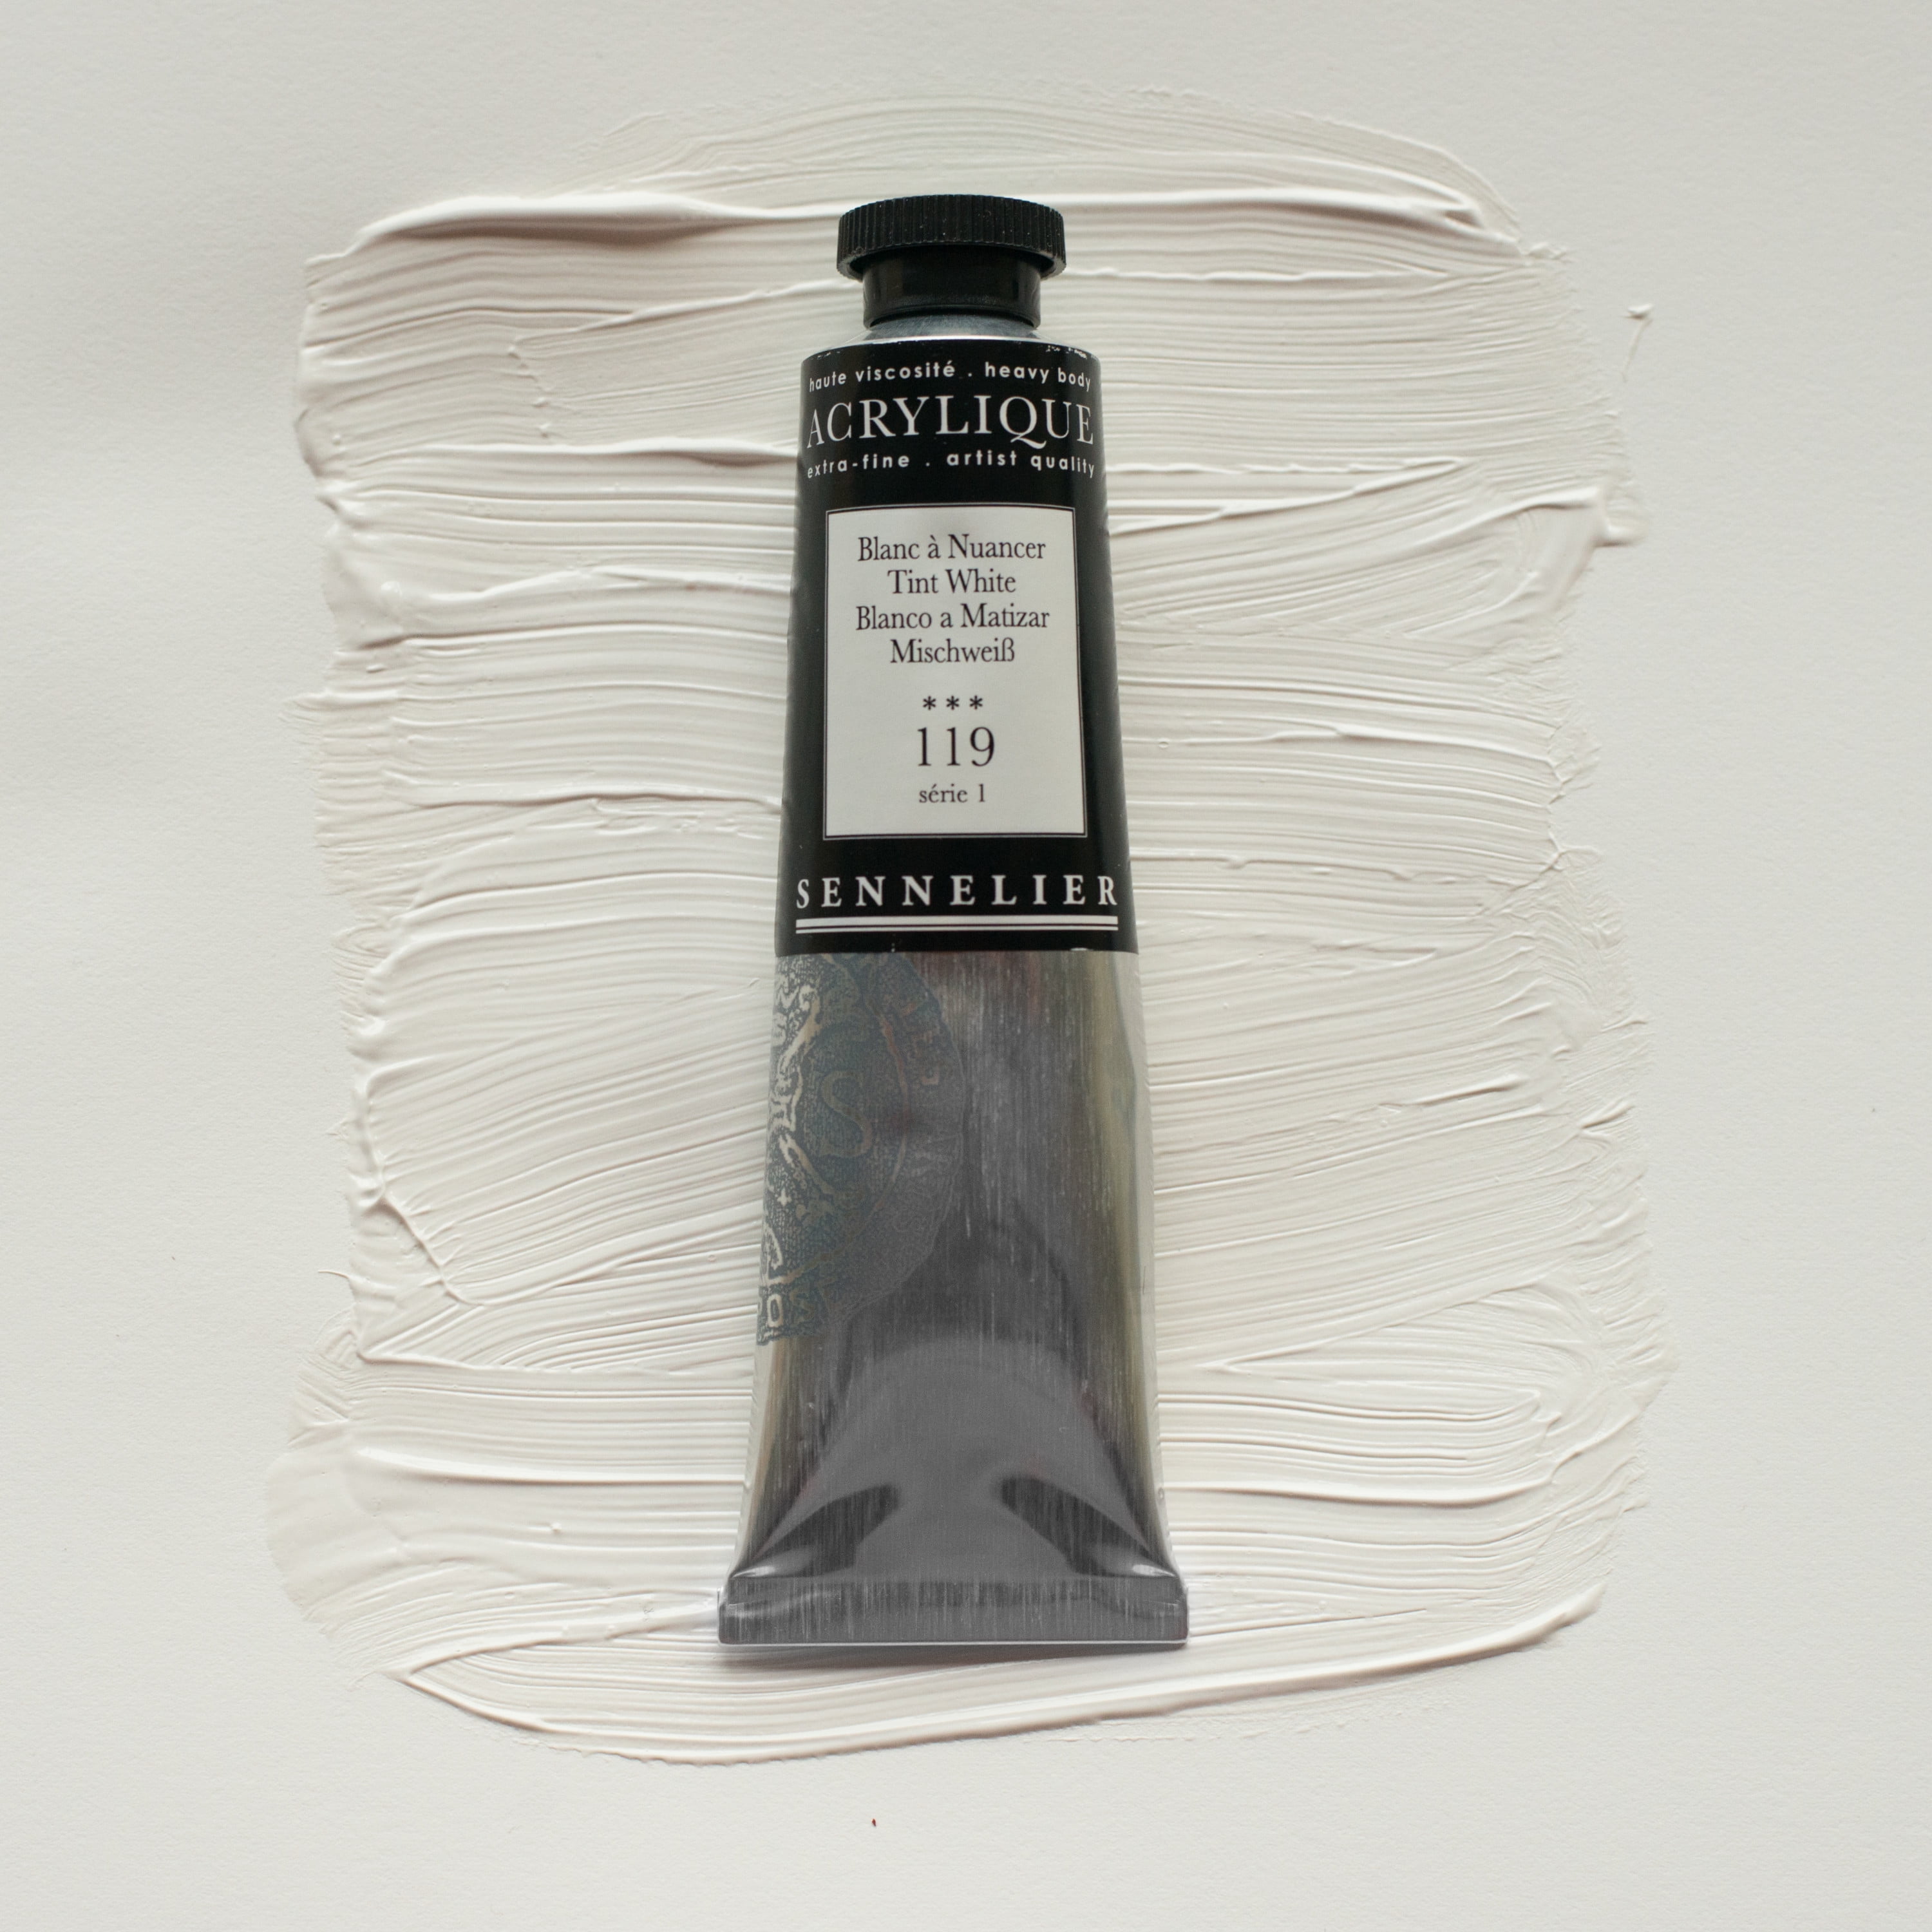 Sennelier Extra Fine Artist Acrylic Gesso - White, 500ml Jar